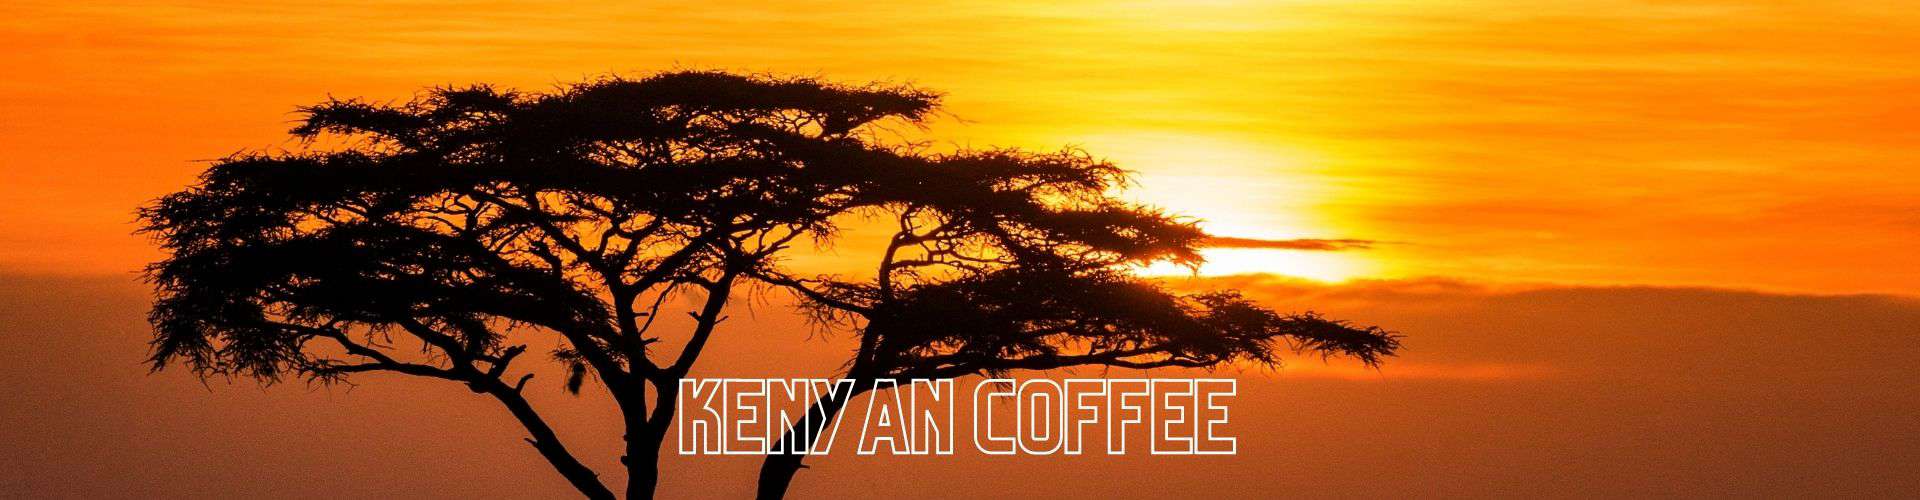 9 Best Kenyan Coffees: Which Kenyan Coffee Should You Buy?